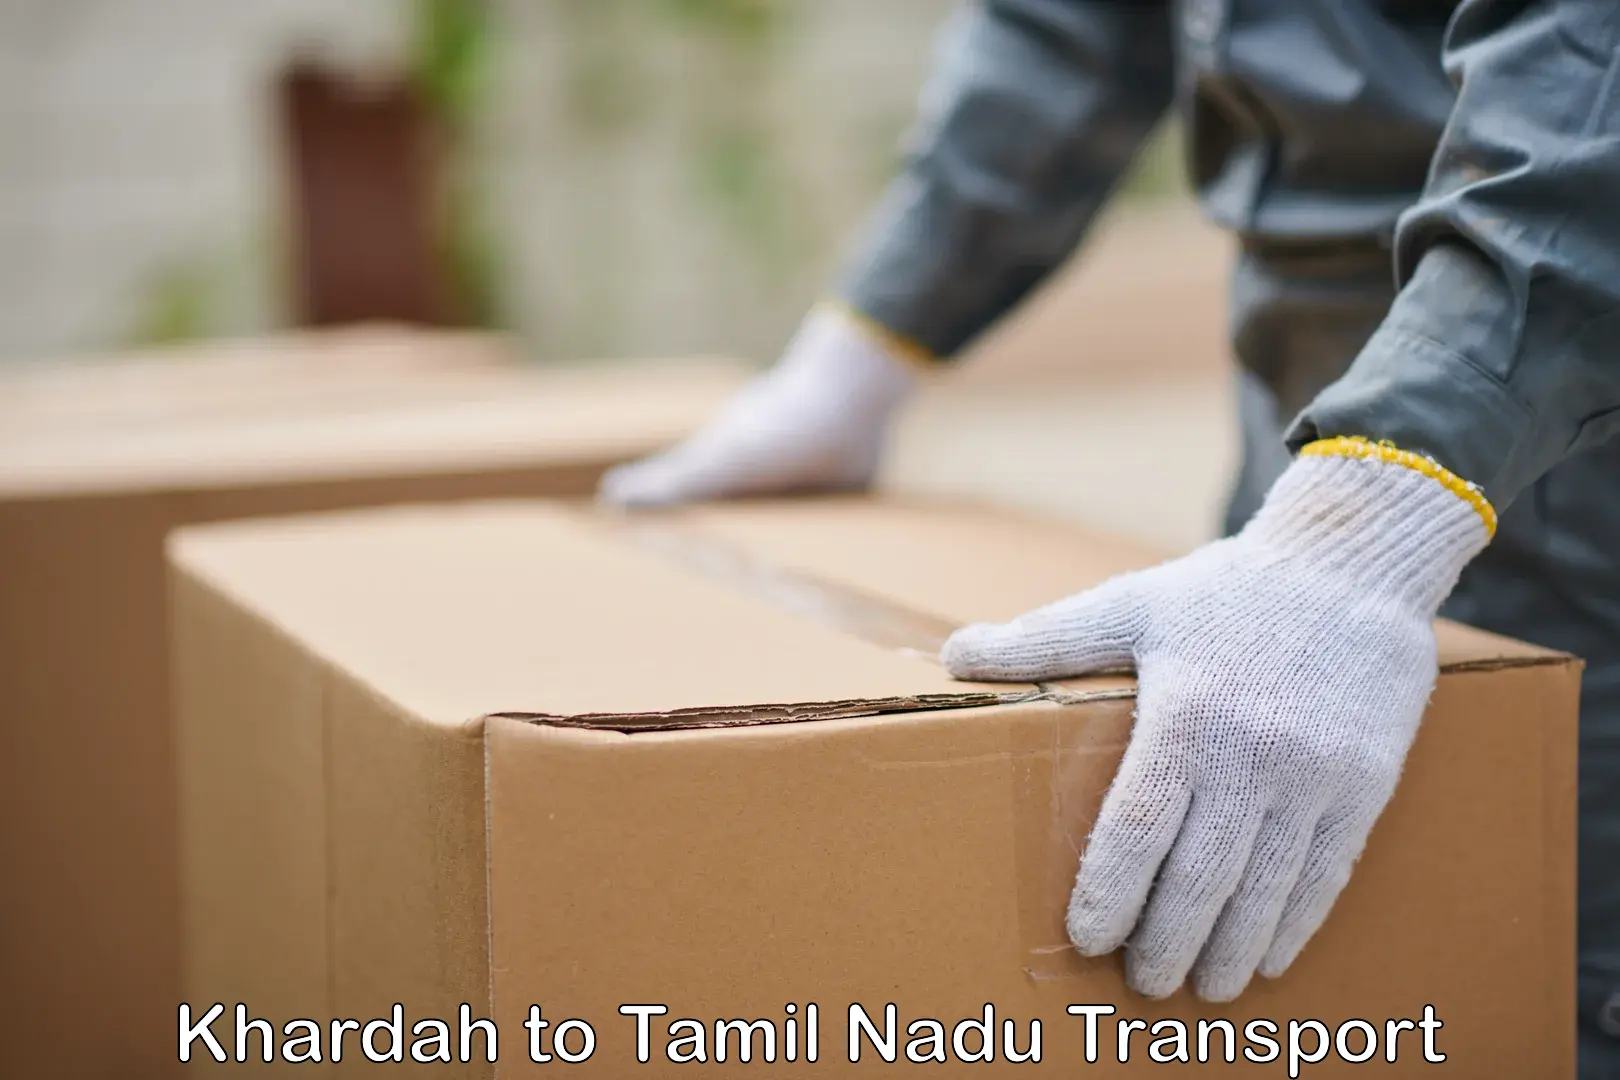 Truck transport companies in India Khardah to Tamil Nadu